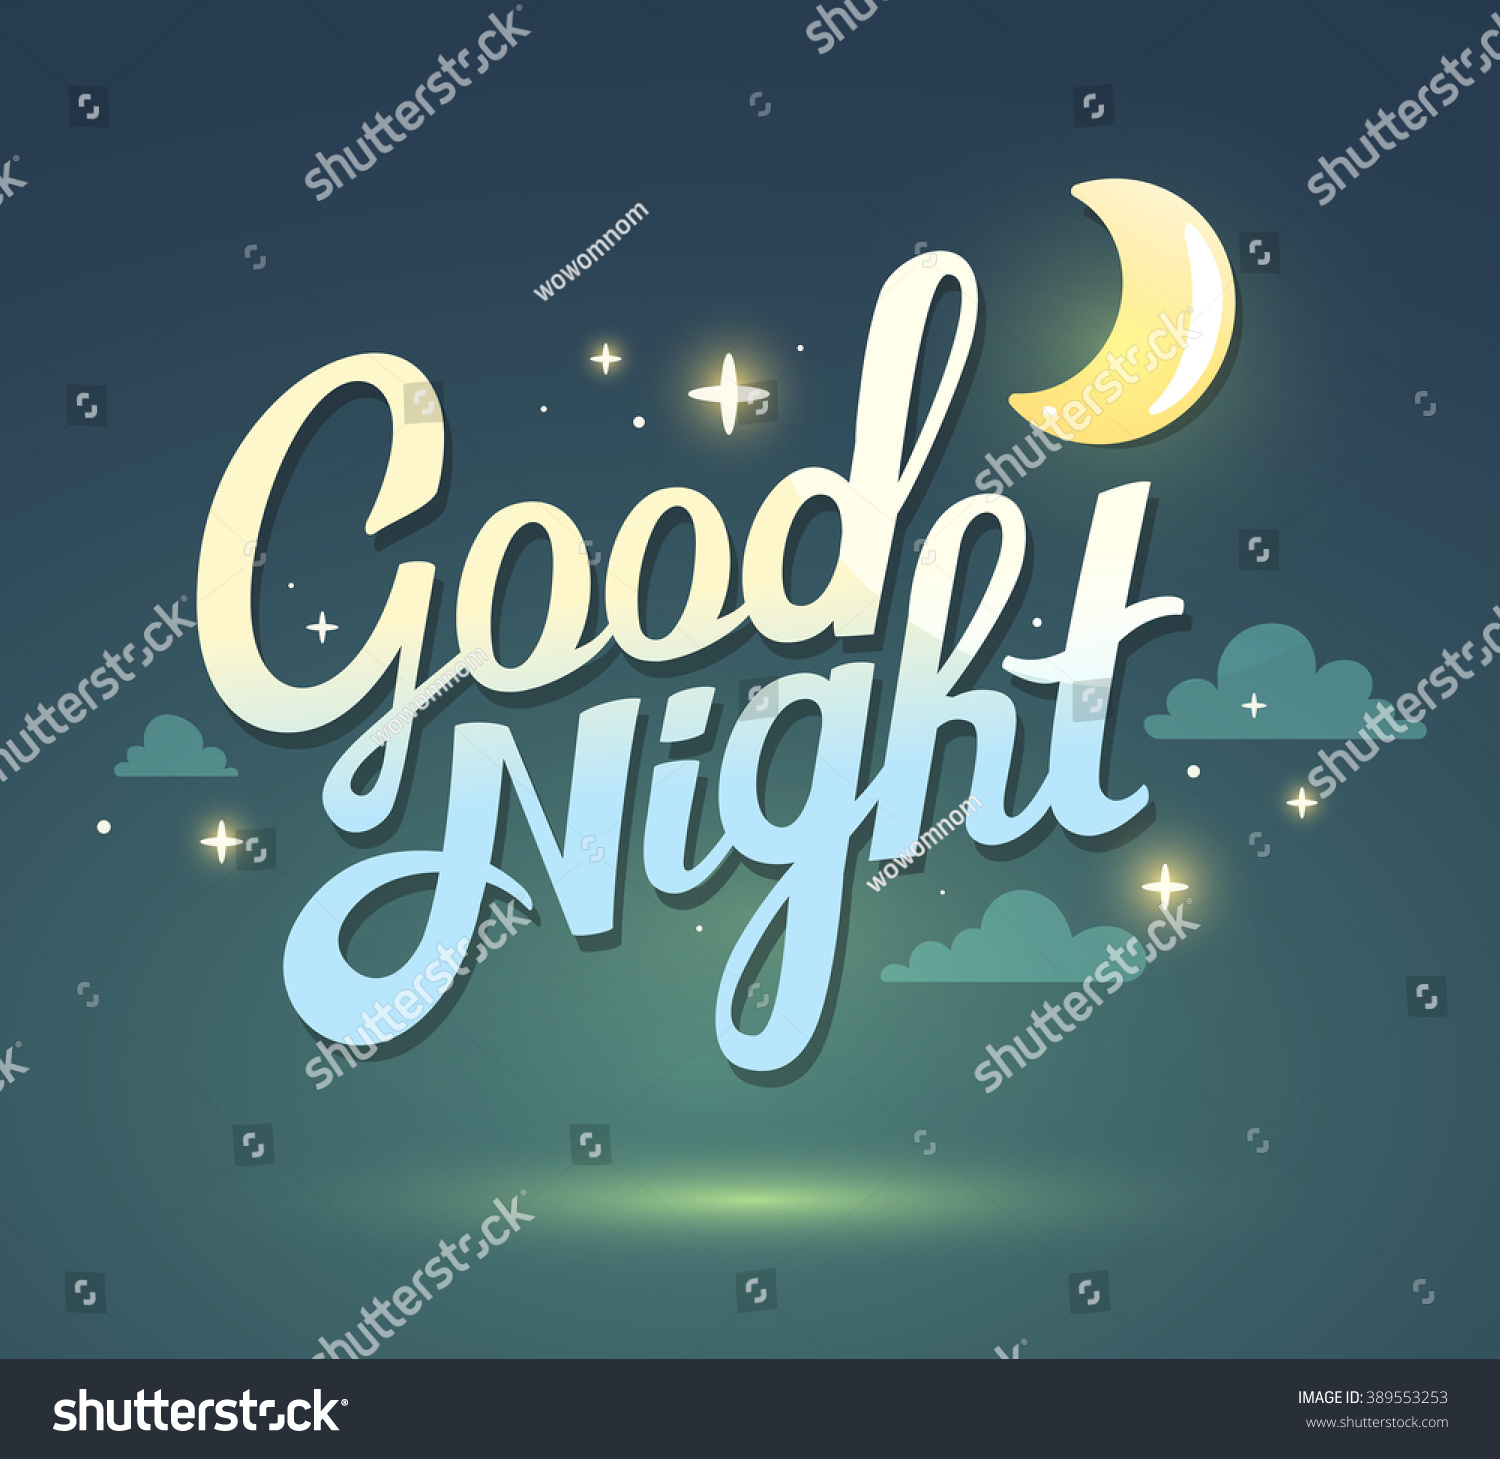 Vector Illustration Wish Good Night On Stock Vector 389553253 ...